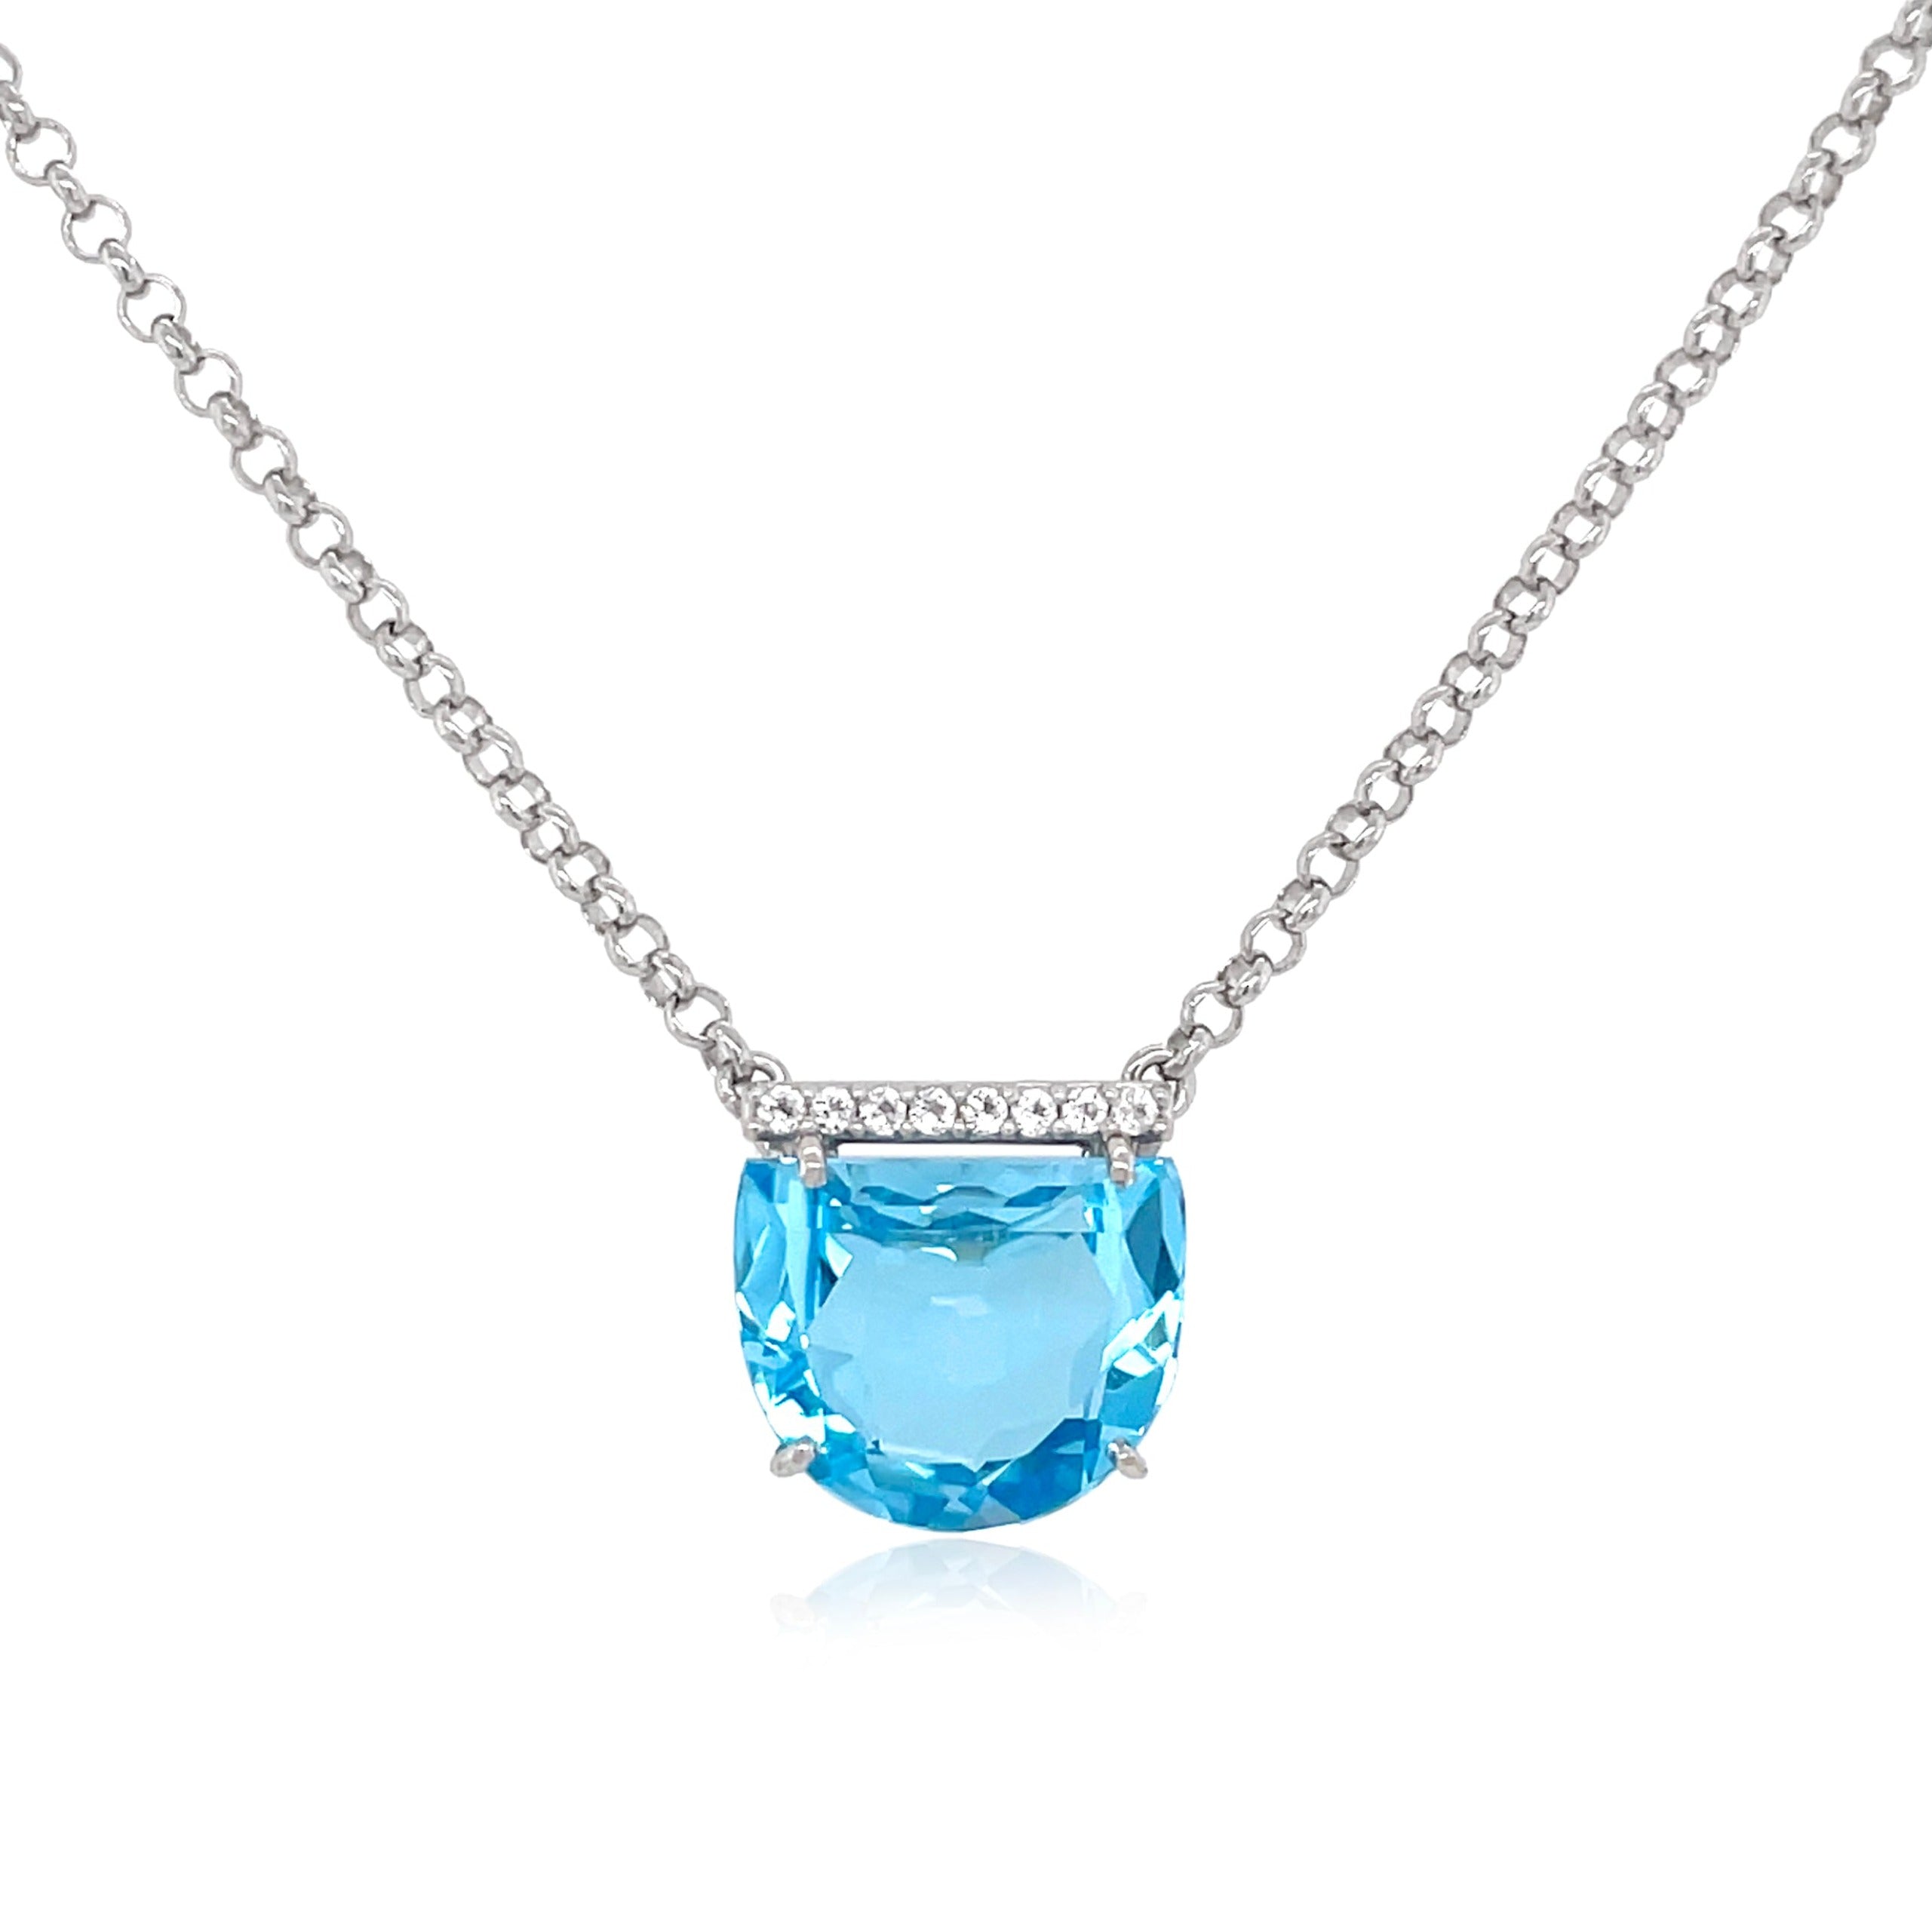 PENDULUM Necklace (1322) - Blue Topaz / SS